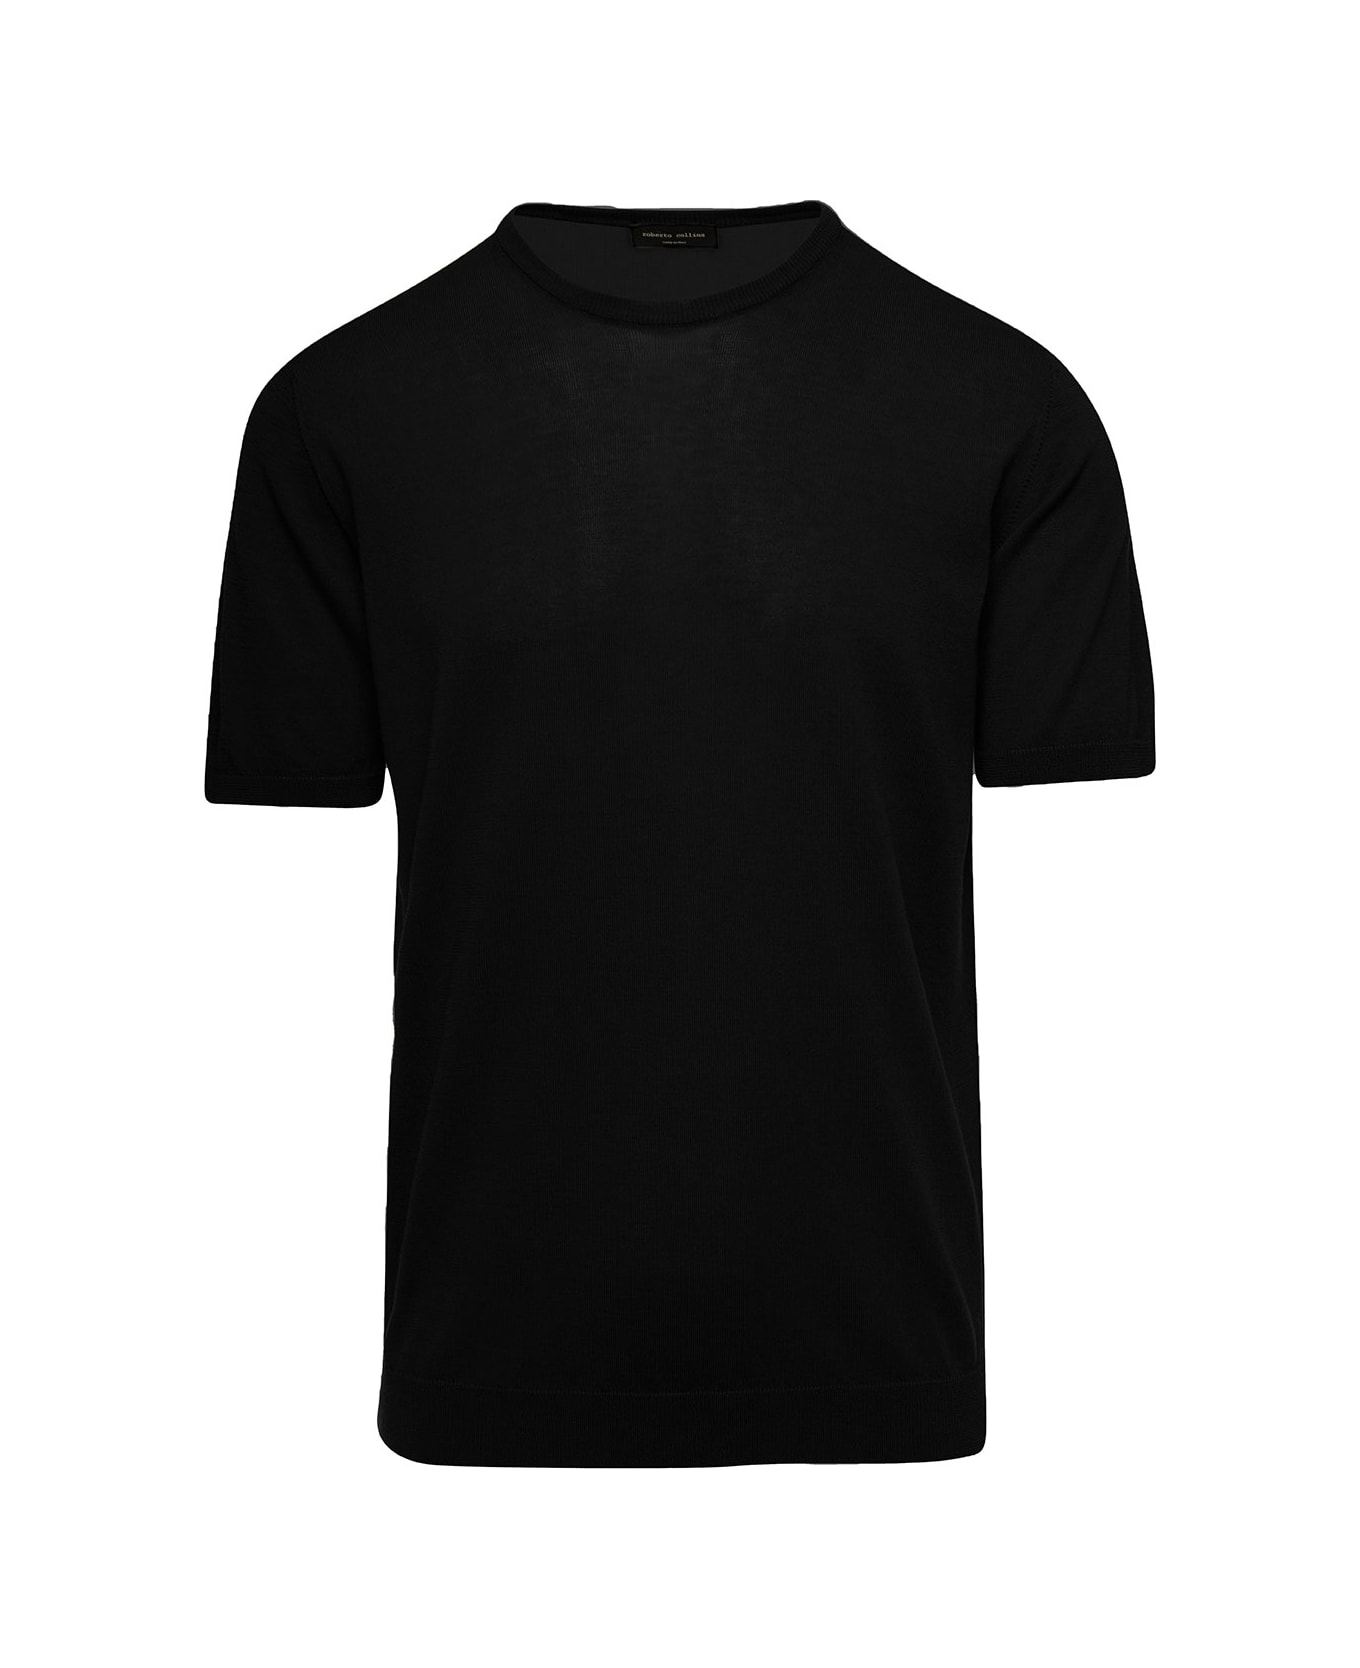 Roberto Collina Black Crewneck T-shirt In Cotton Man - BLACK